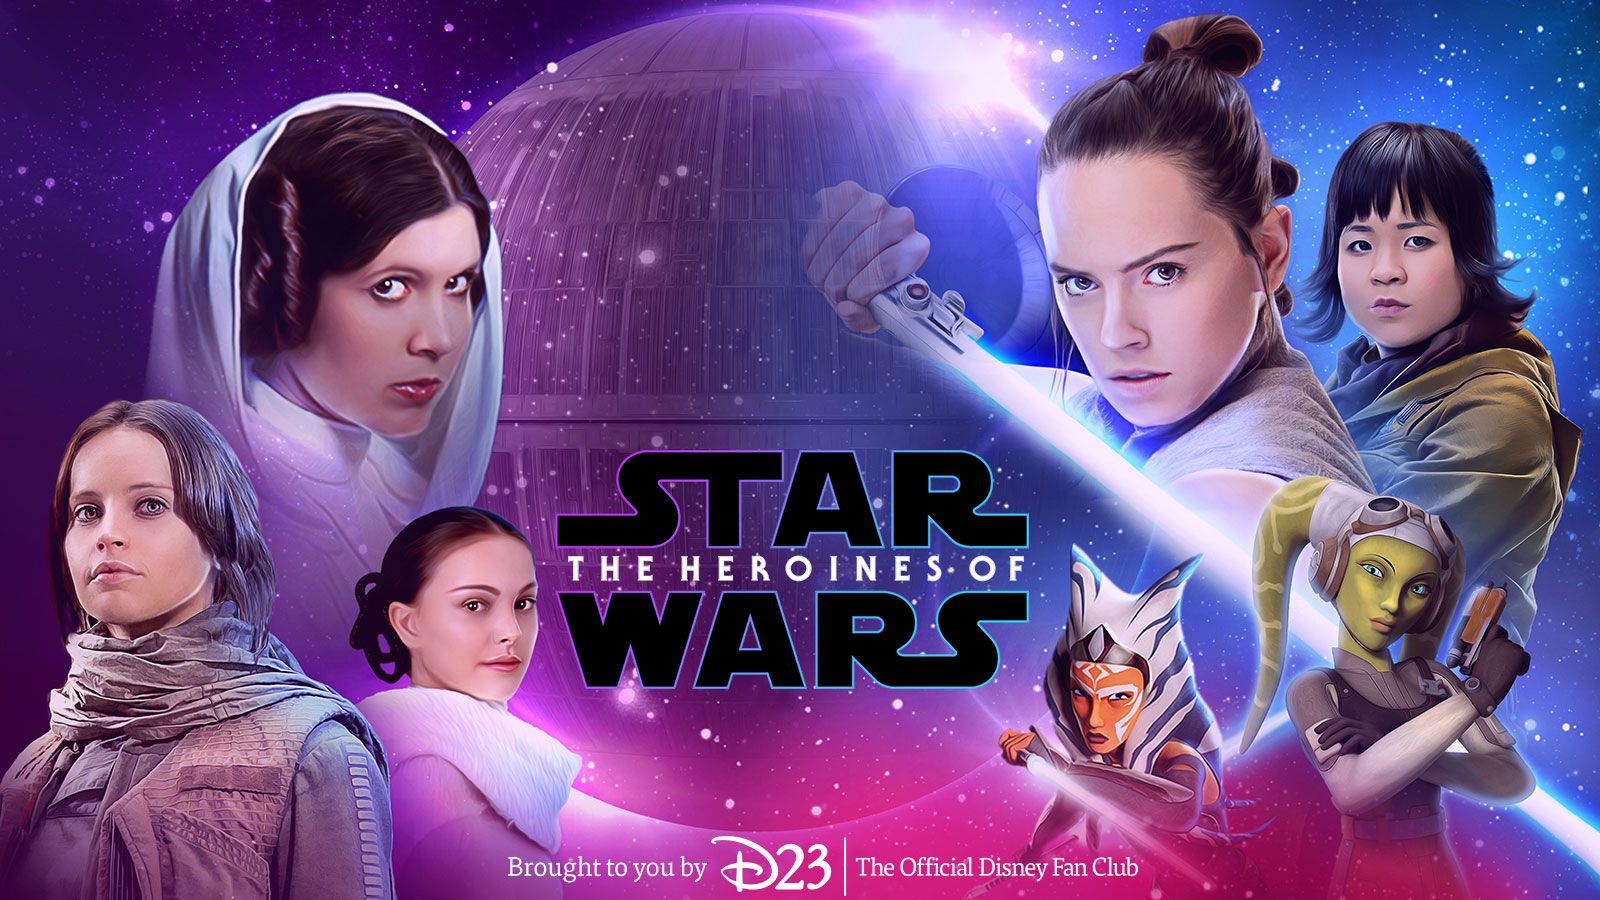 Star Wars Heroines Wallpaper for Your Desktop, Tablet or Phone